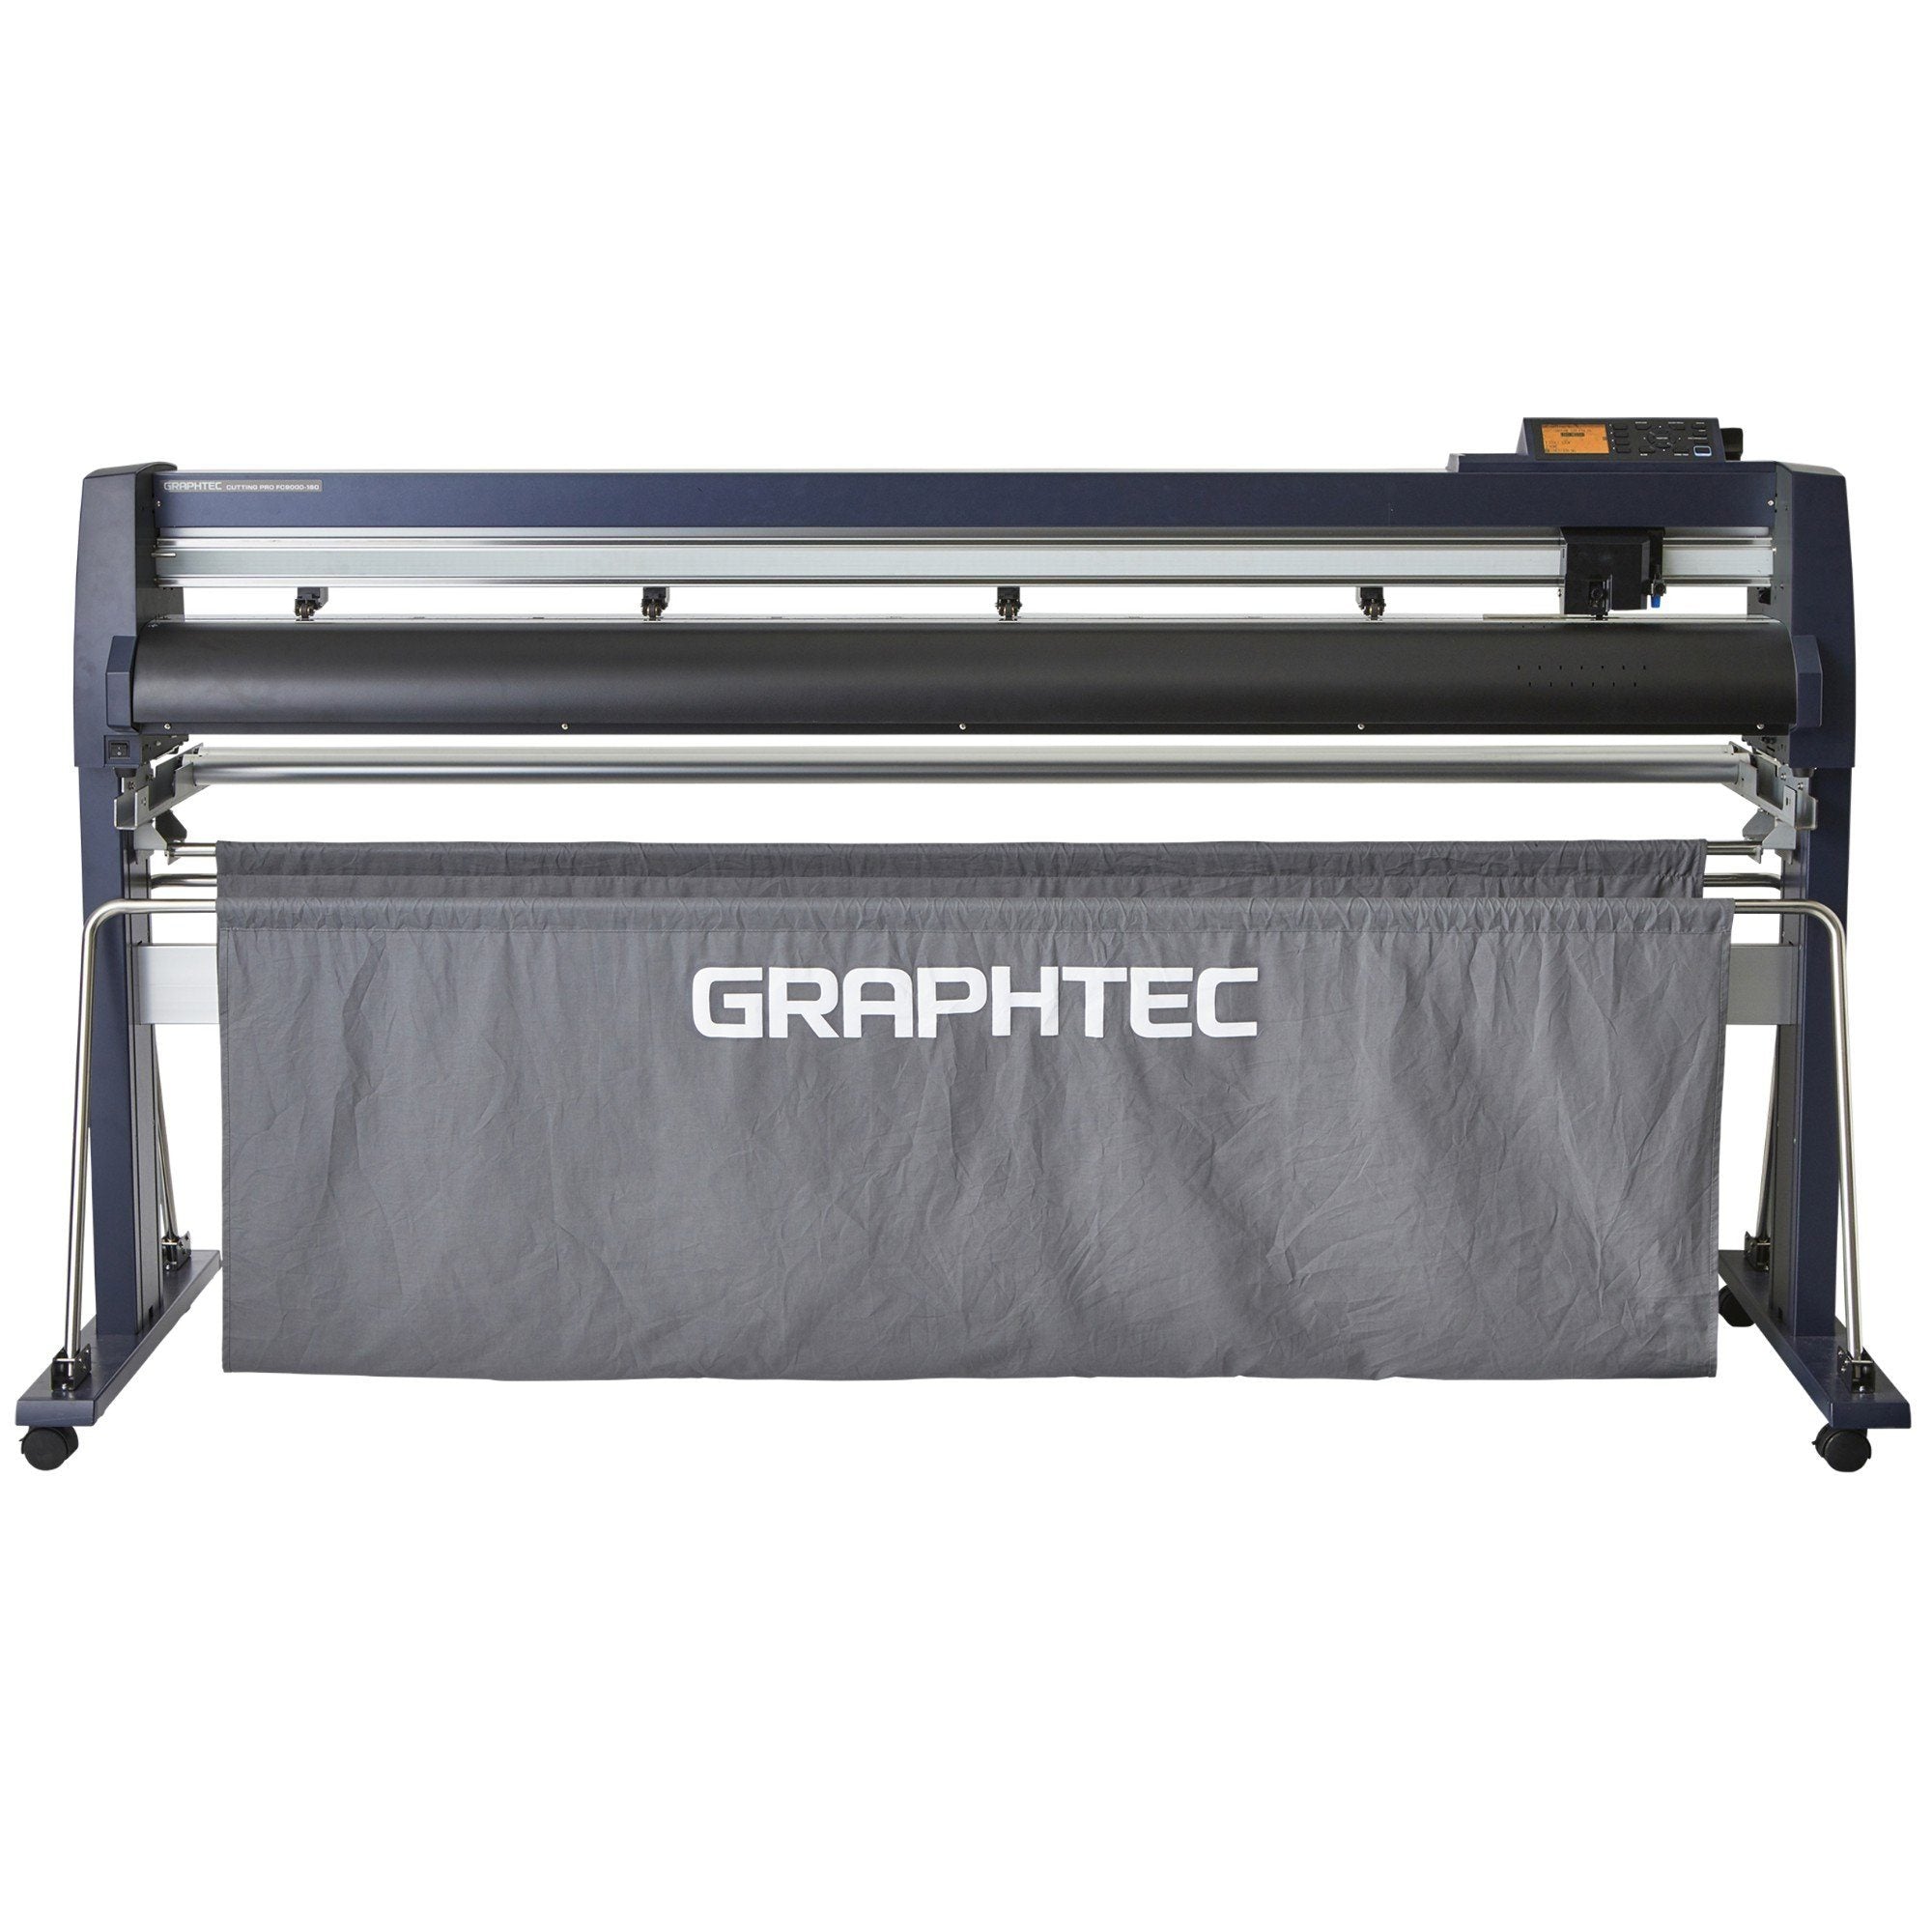 Graphtec FC9000-160 64 Vinyl Cutter w/ Bundle, Bonus Software & 3 Year Warranty